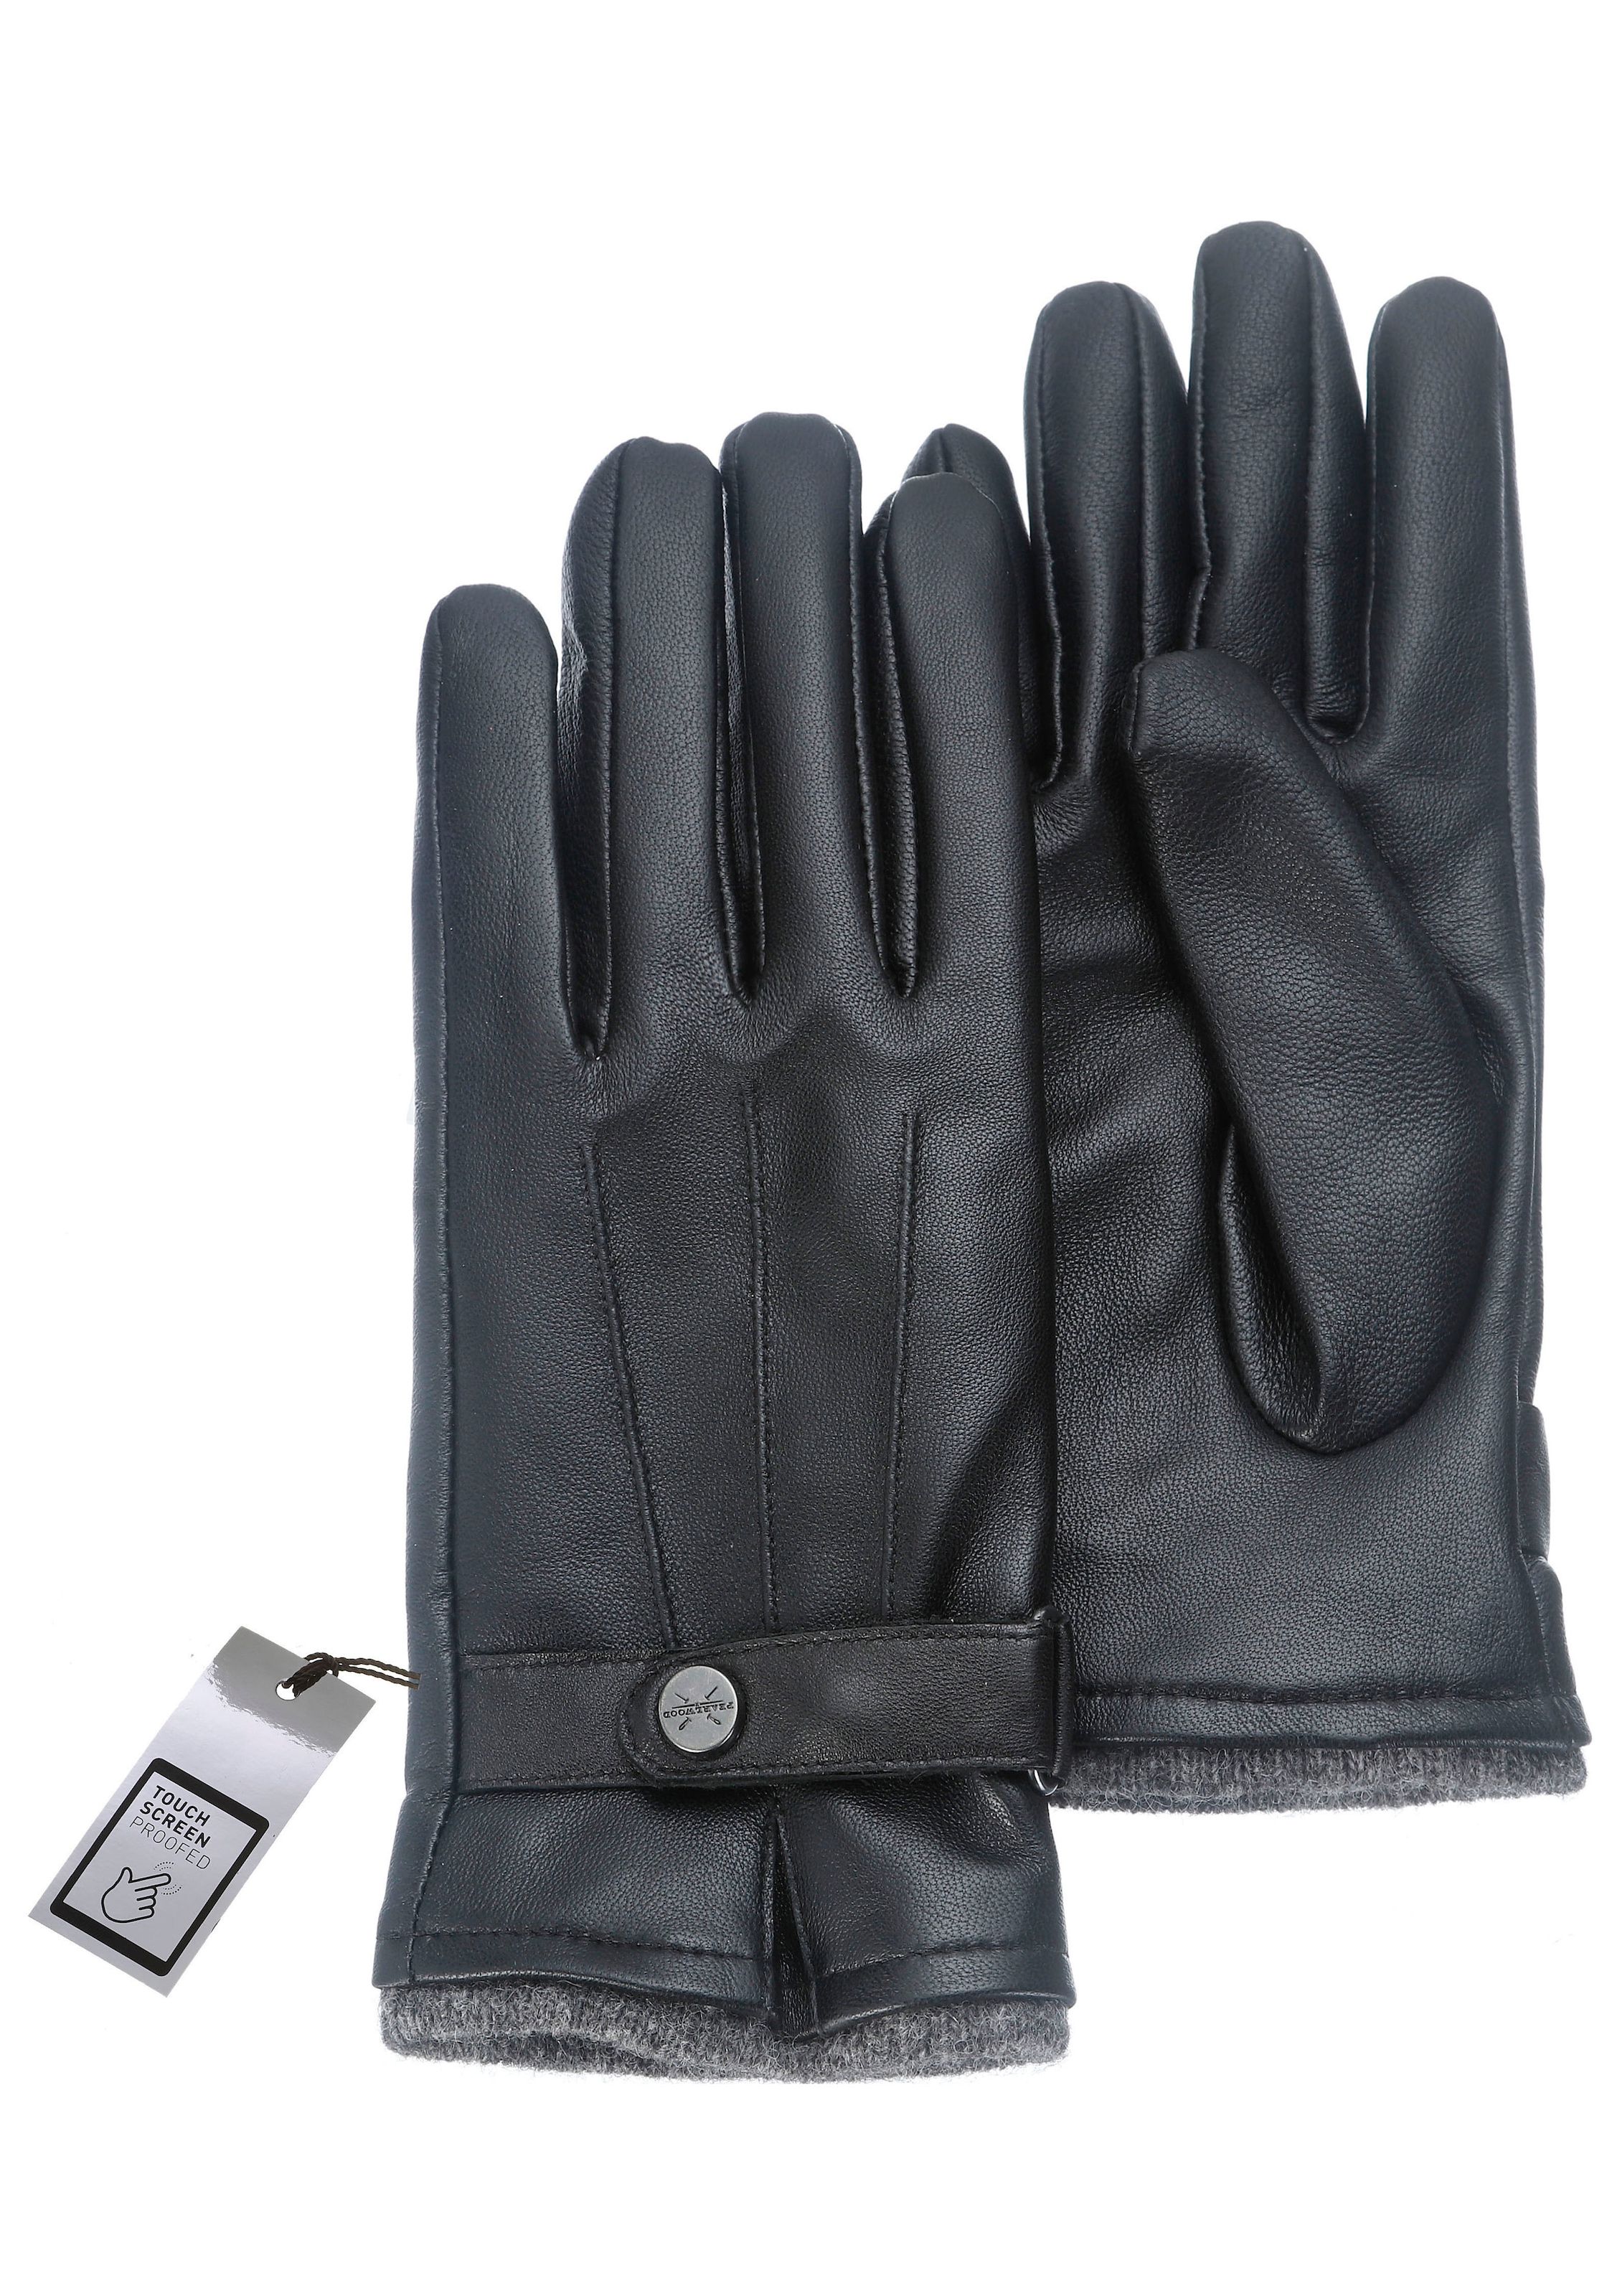 PEARLWOOD Lederhandschuhe, - proofed Fingern 10 kaufen online bedienbar | Touchscreen mit Jelmoli-Versand